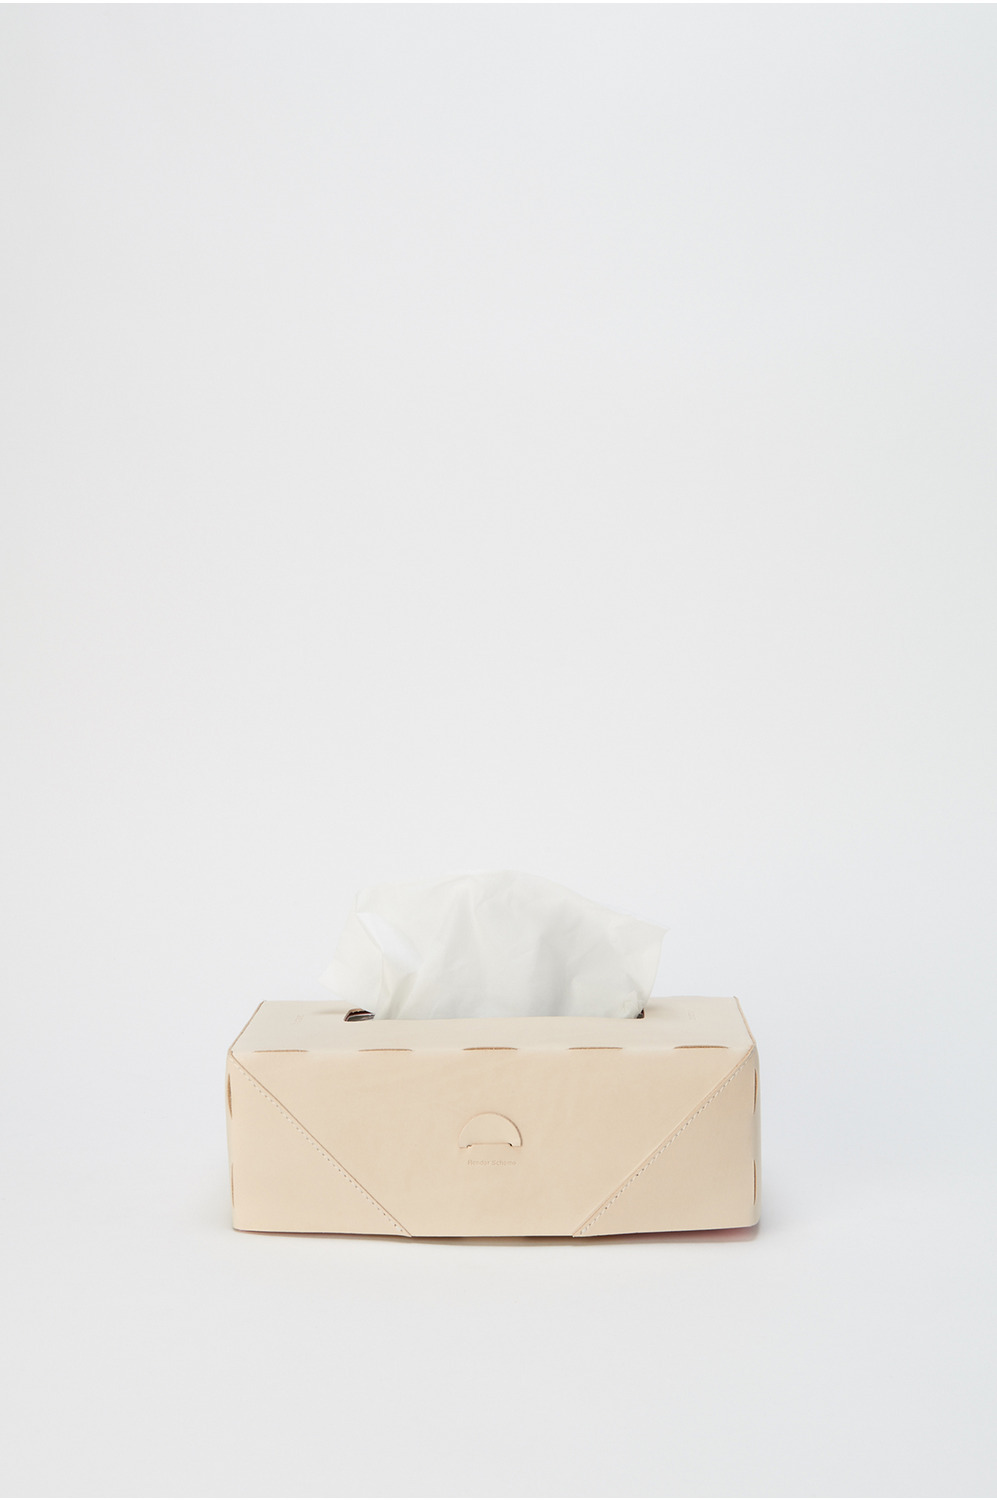 tissue box case for celebrity 詳細画像 natural 1